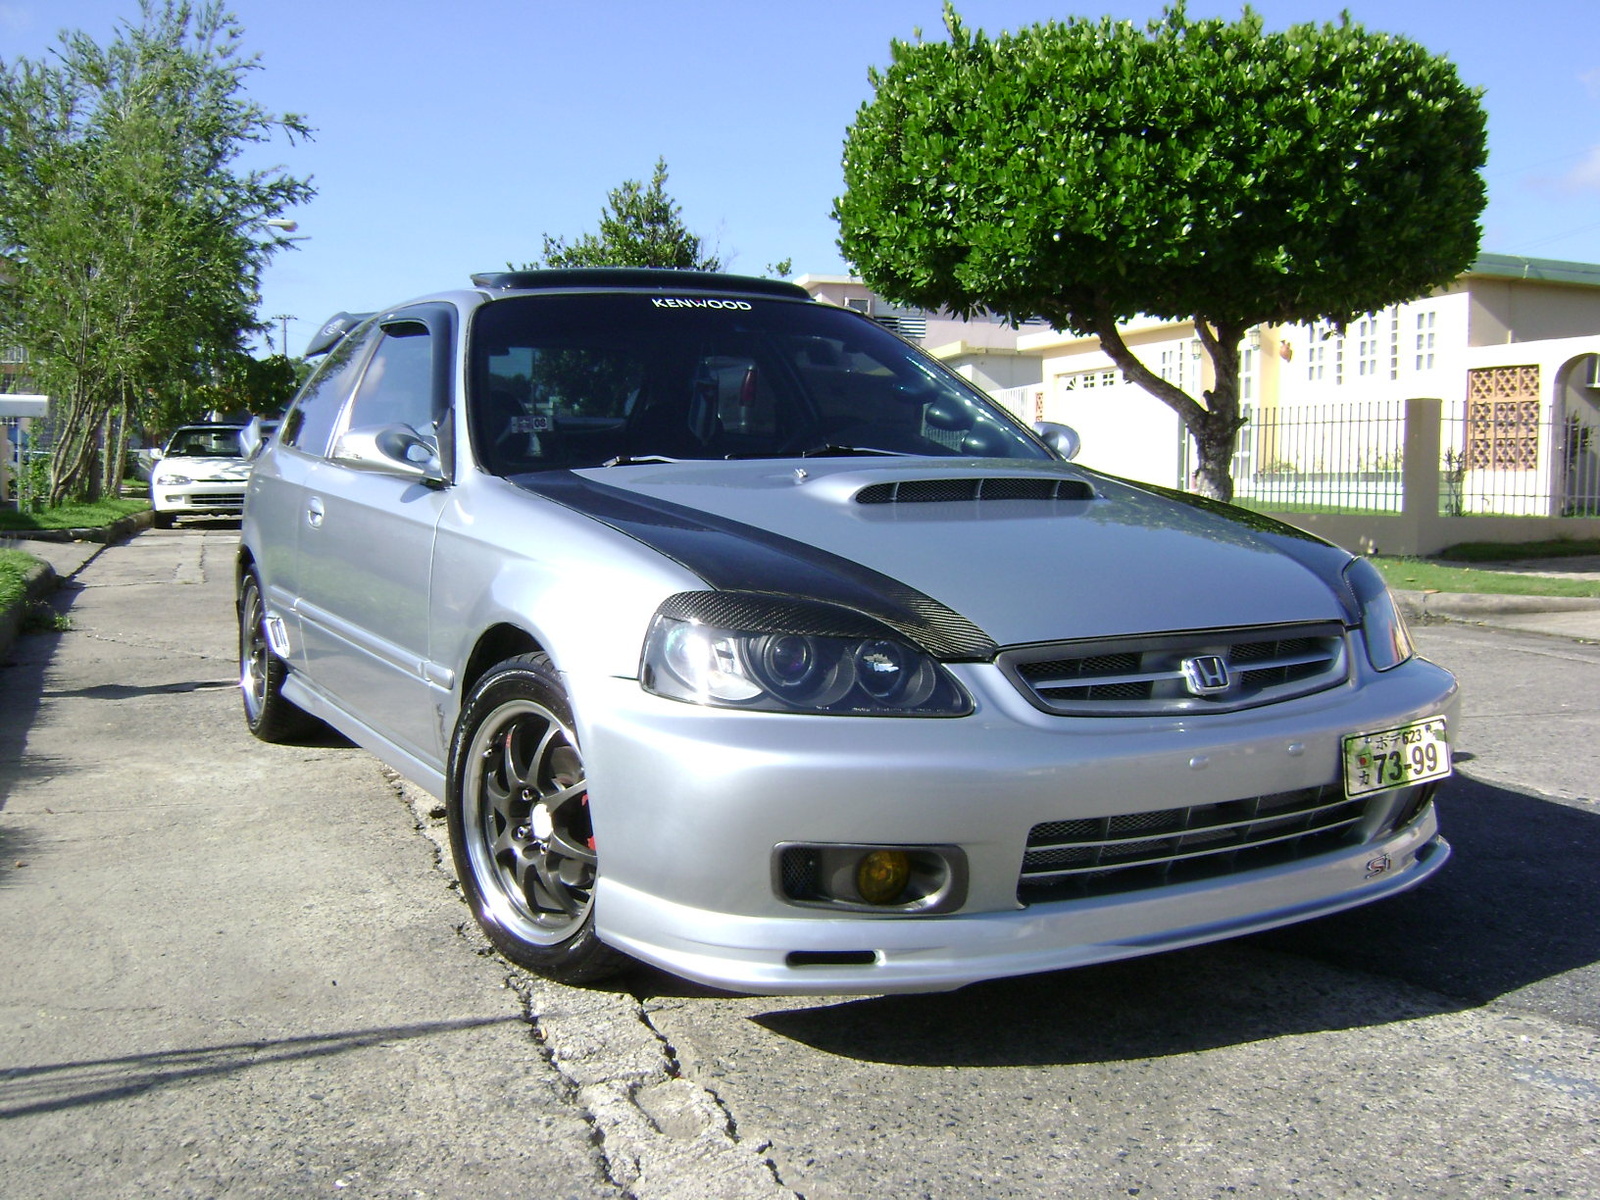 1999 Honda civic cx hatchback review #7